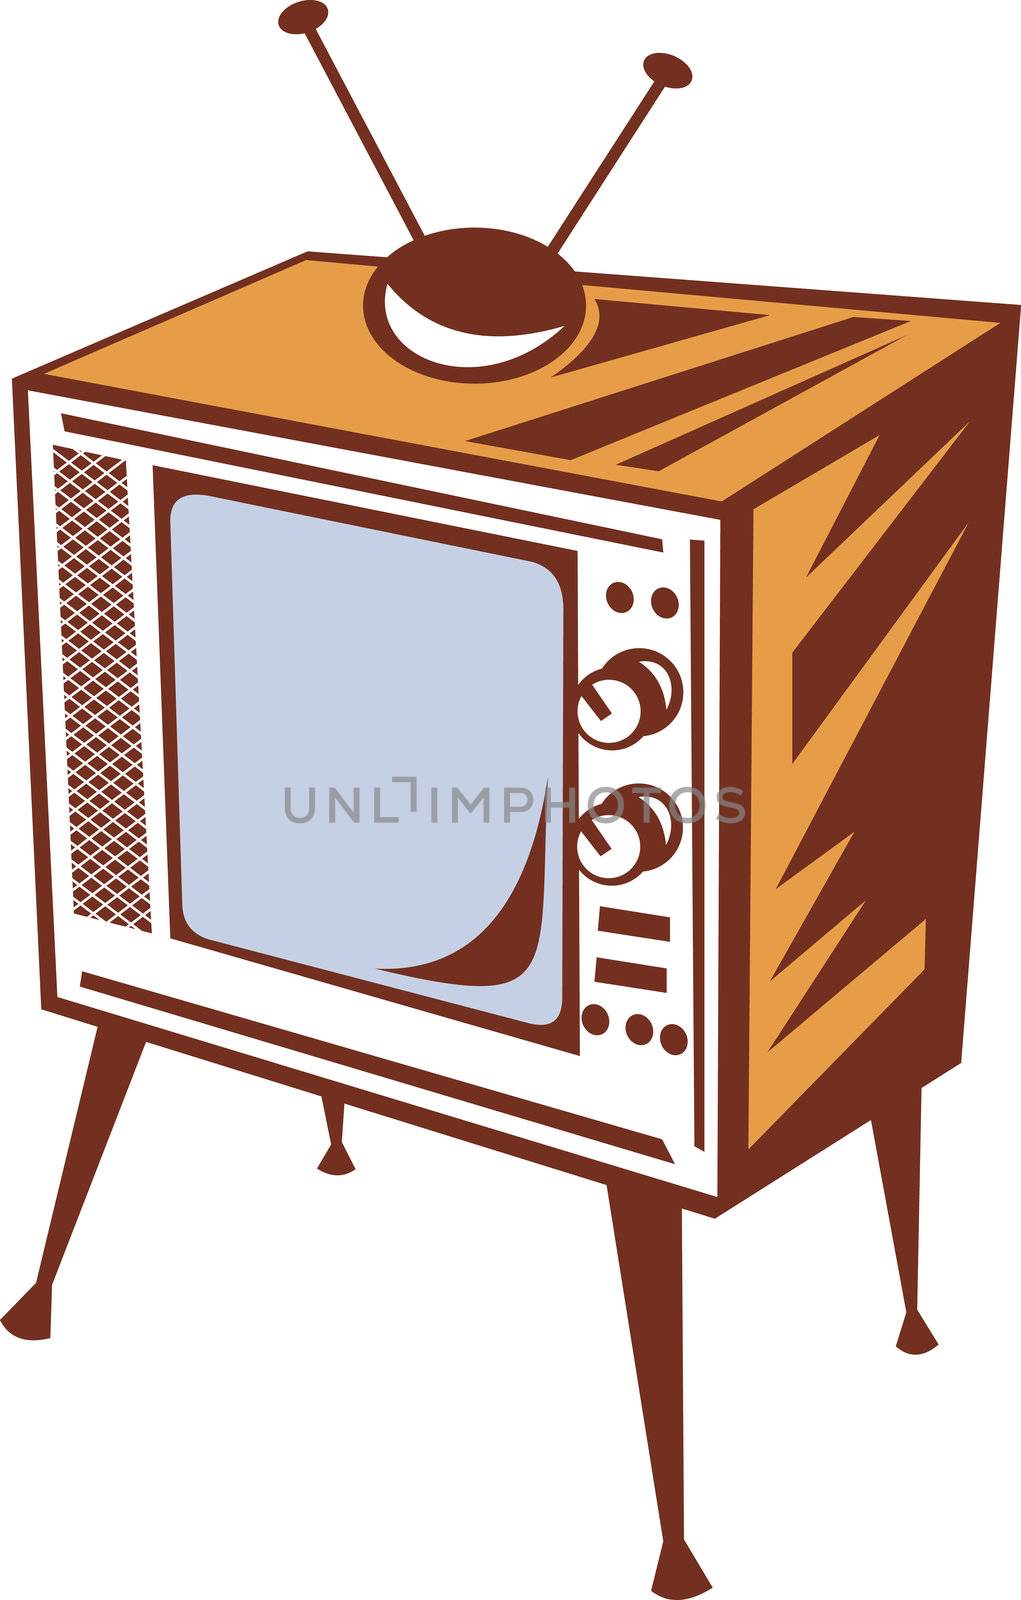 illustration of a retro styled televsion set